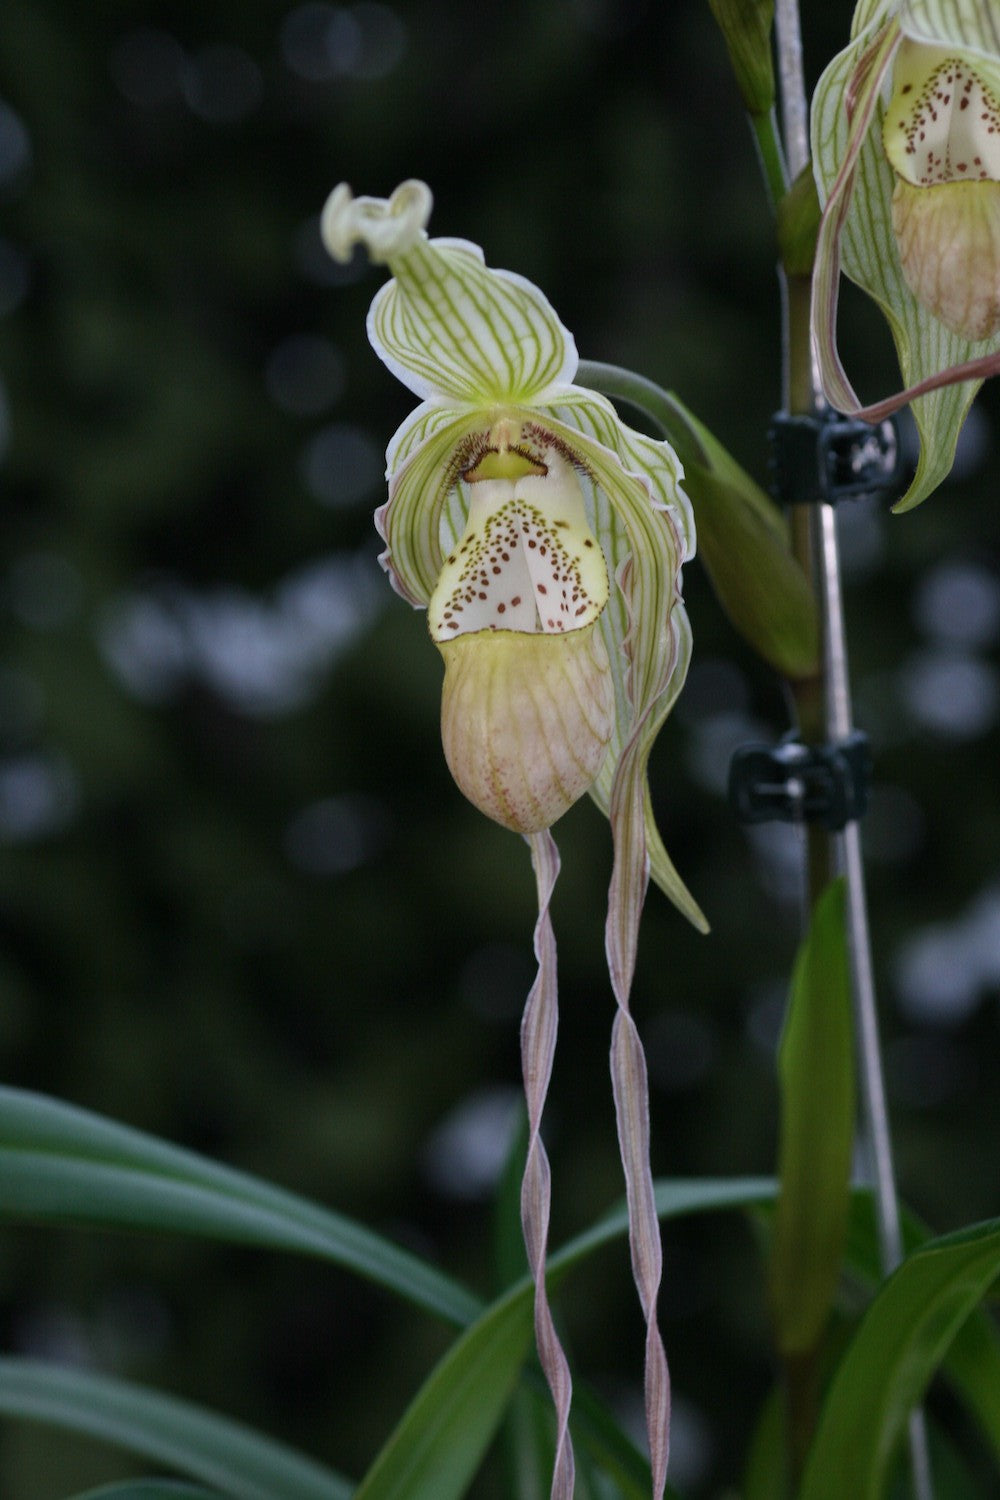 Orhidee Phragmipedium Pearcei x Wallisii, orhidee de colectie, pret atractiv